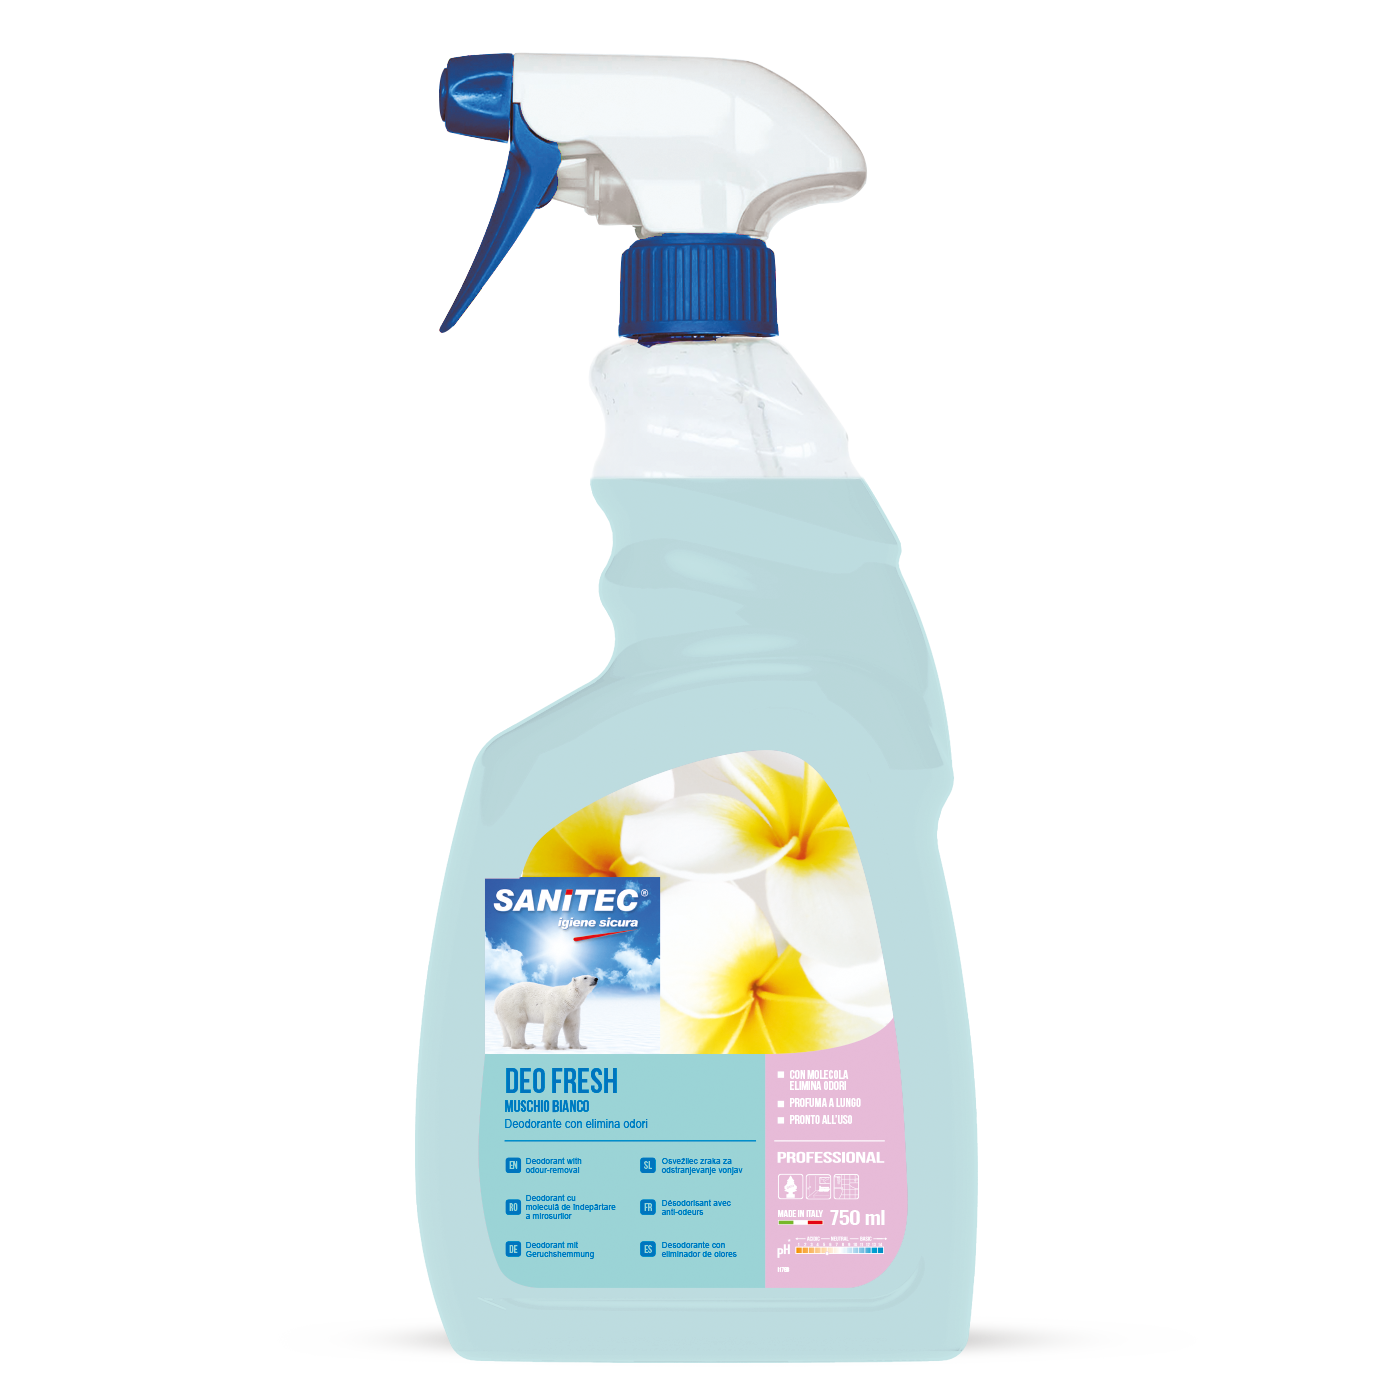 Sanitec DEO FRESH, Deodorante Muschio Bianco, Spray 750 ml - FeF